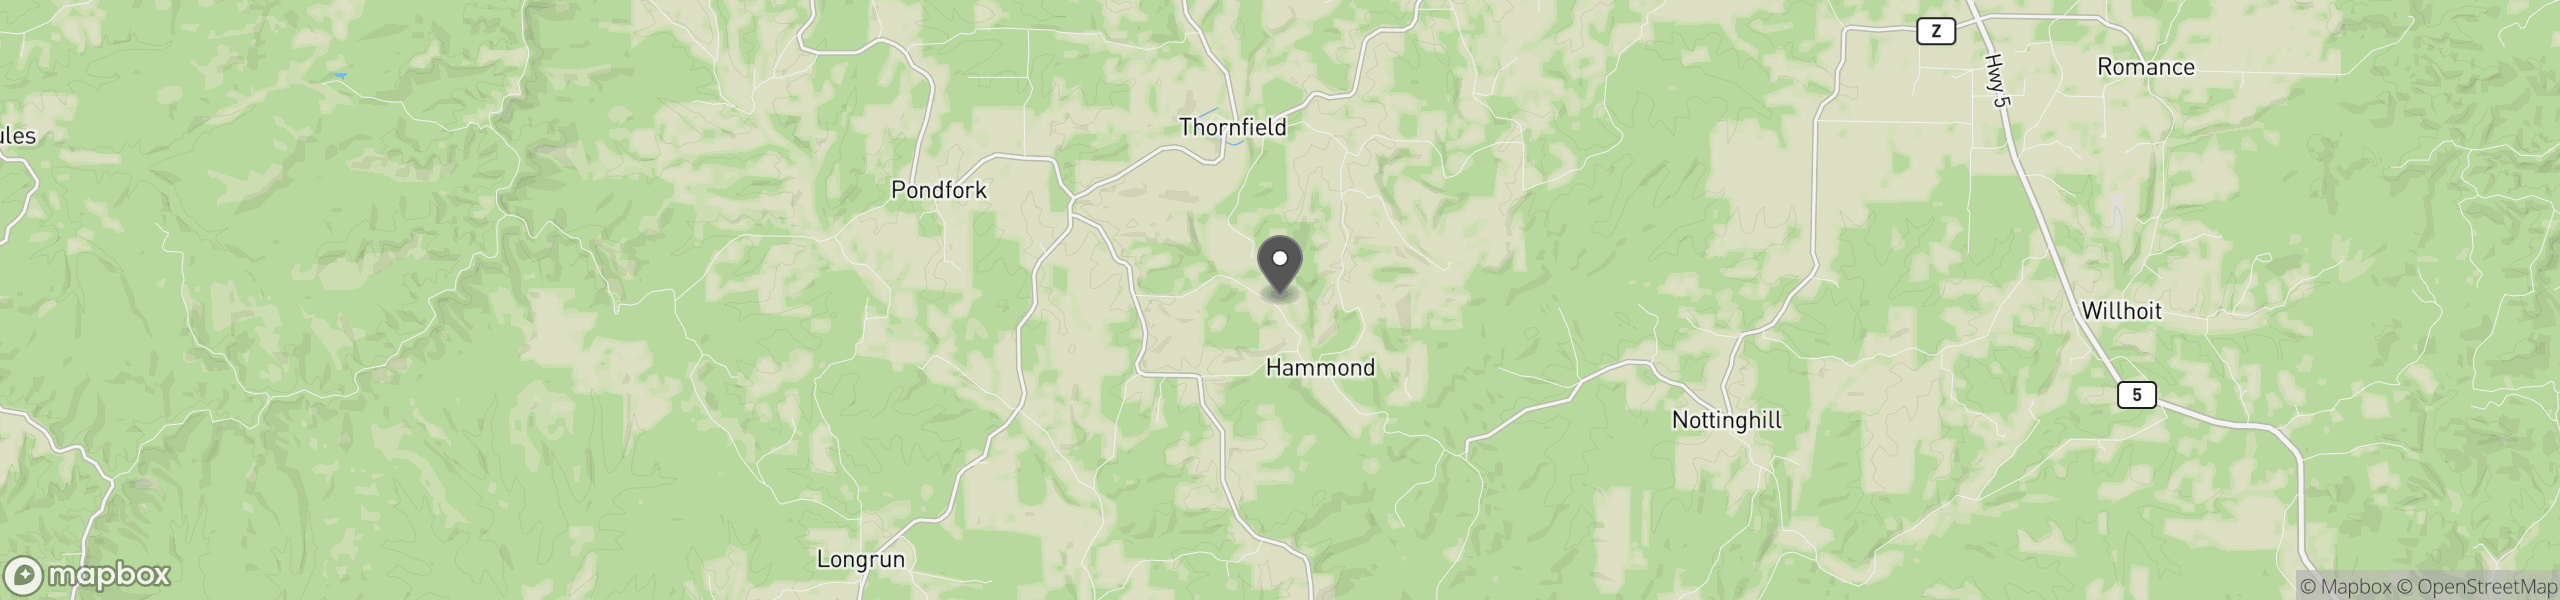 Thornfield, MO 65762